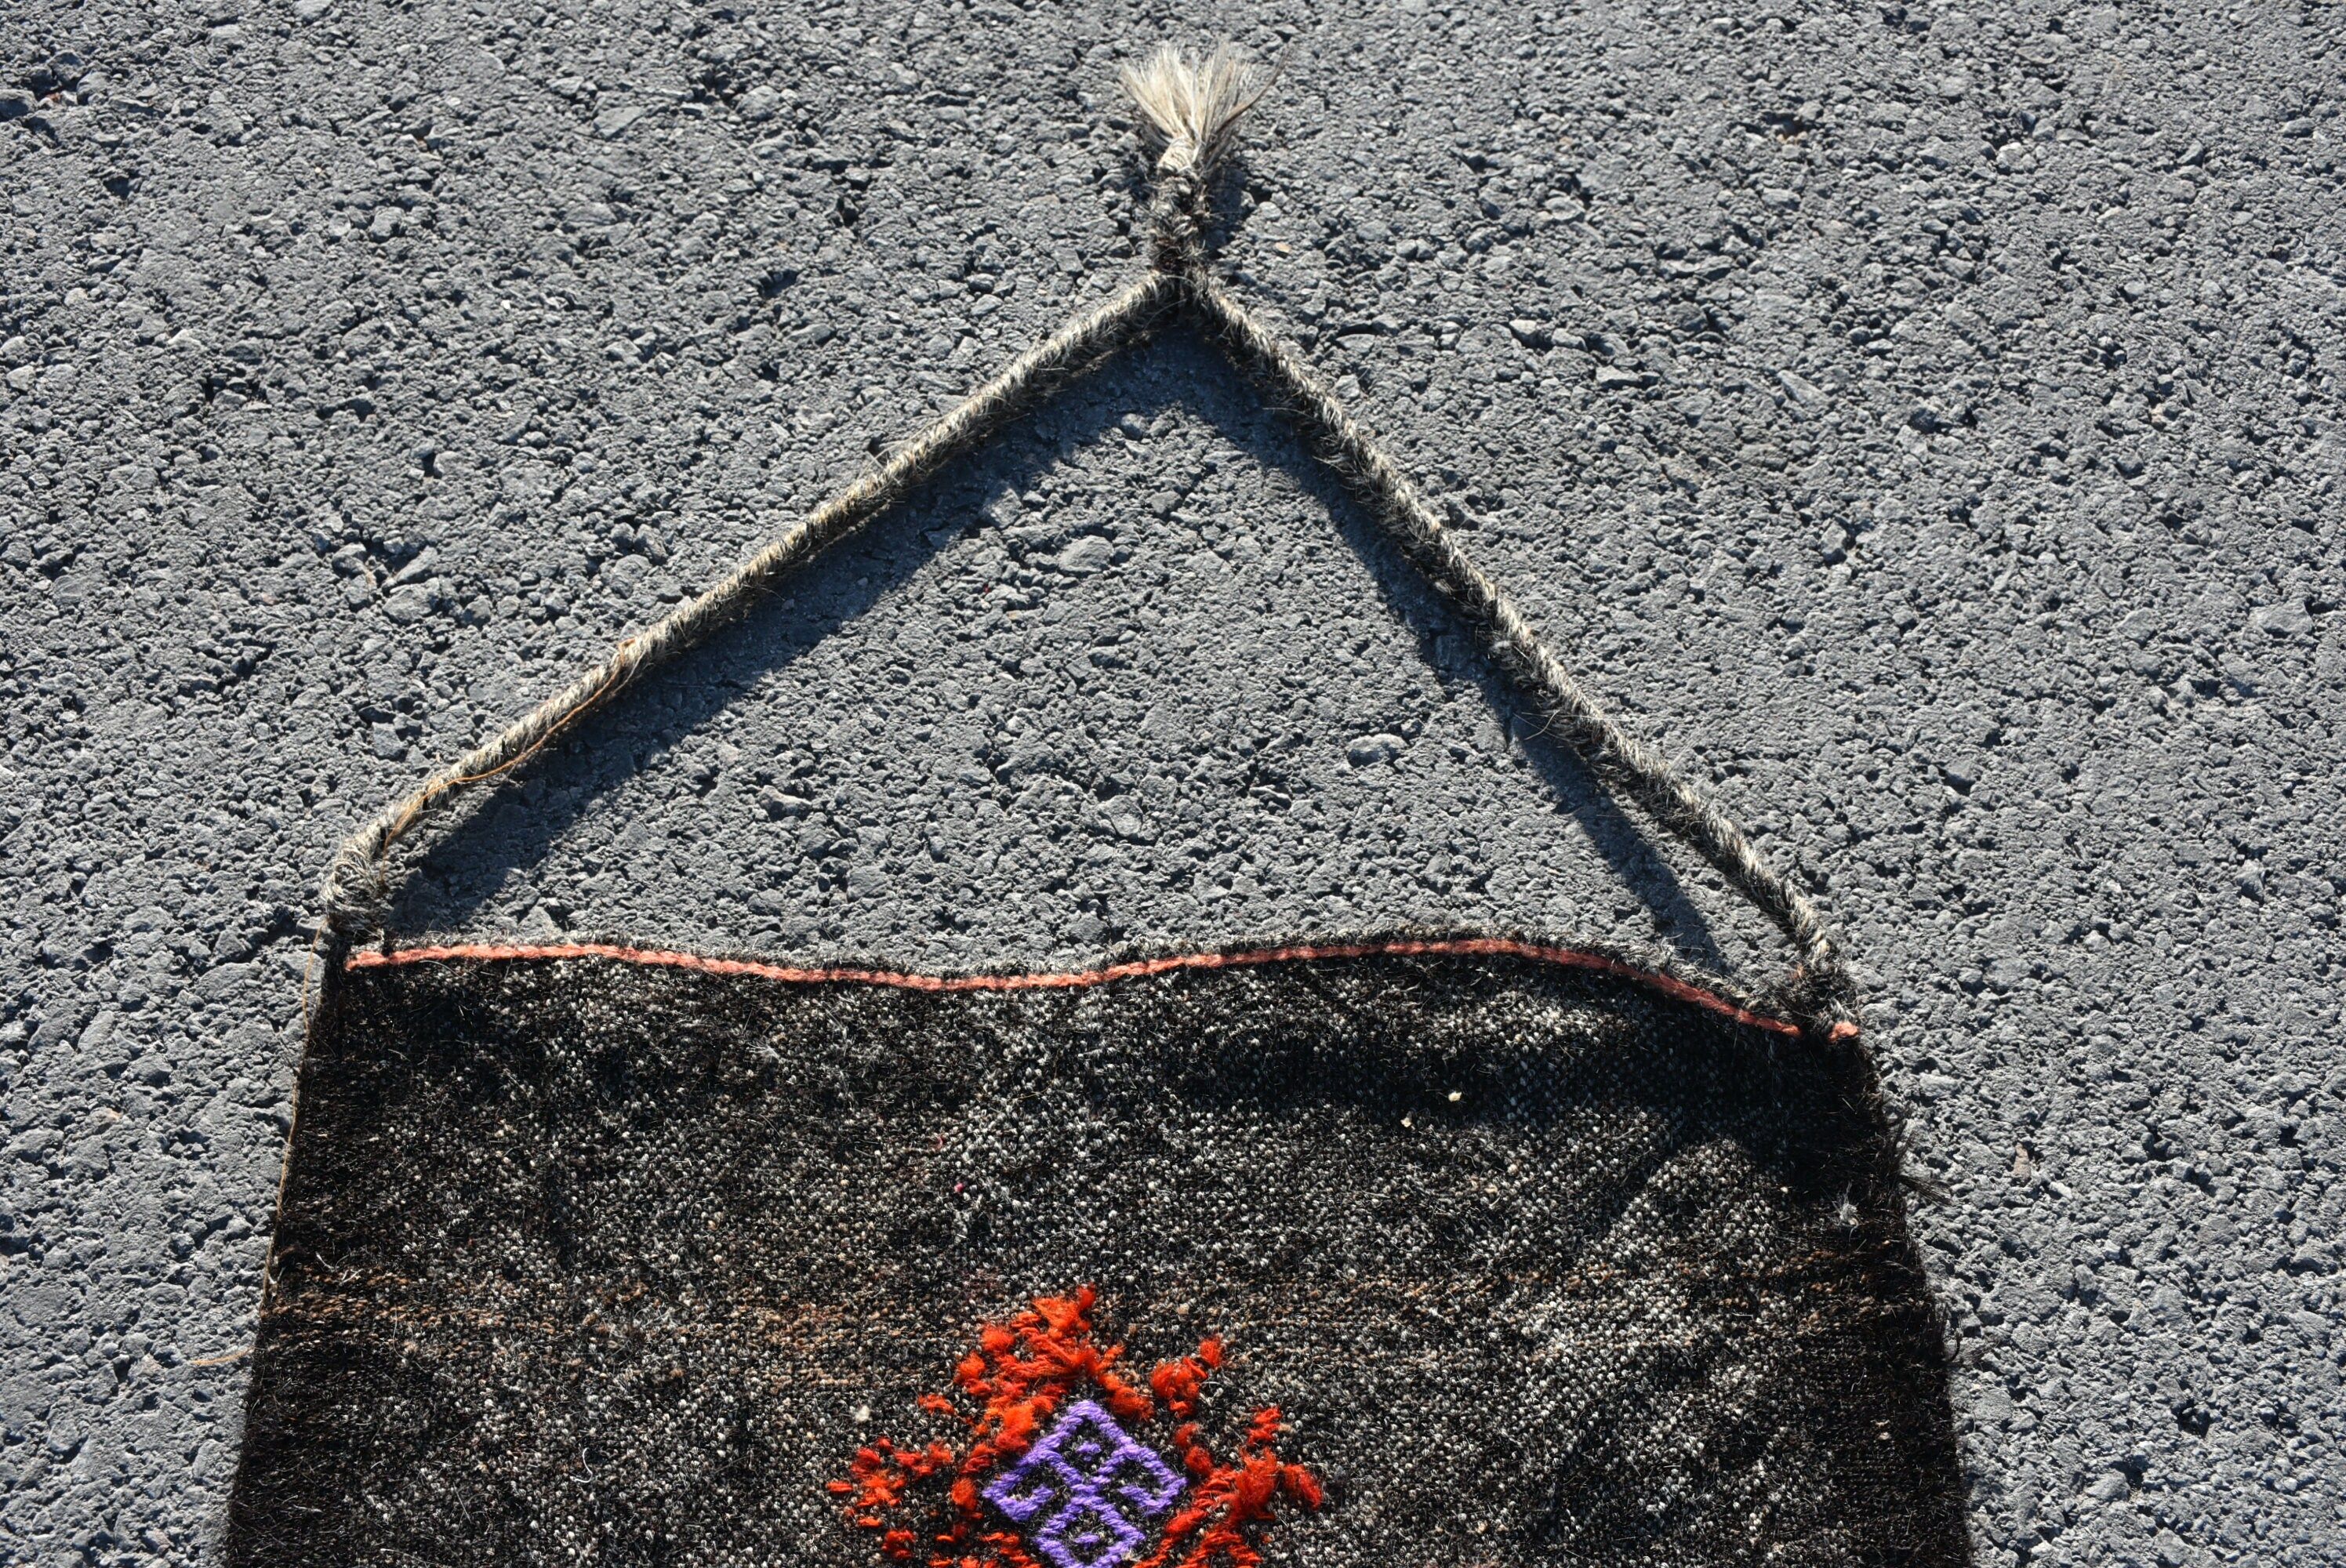 Turkish Rug, Antique Rug, Black Moroccan Rug, Entry Rug, Old Rug, Kilim, Vintage Rugs, 1.9x2 ft Small Rug, Wall Hanging Rug